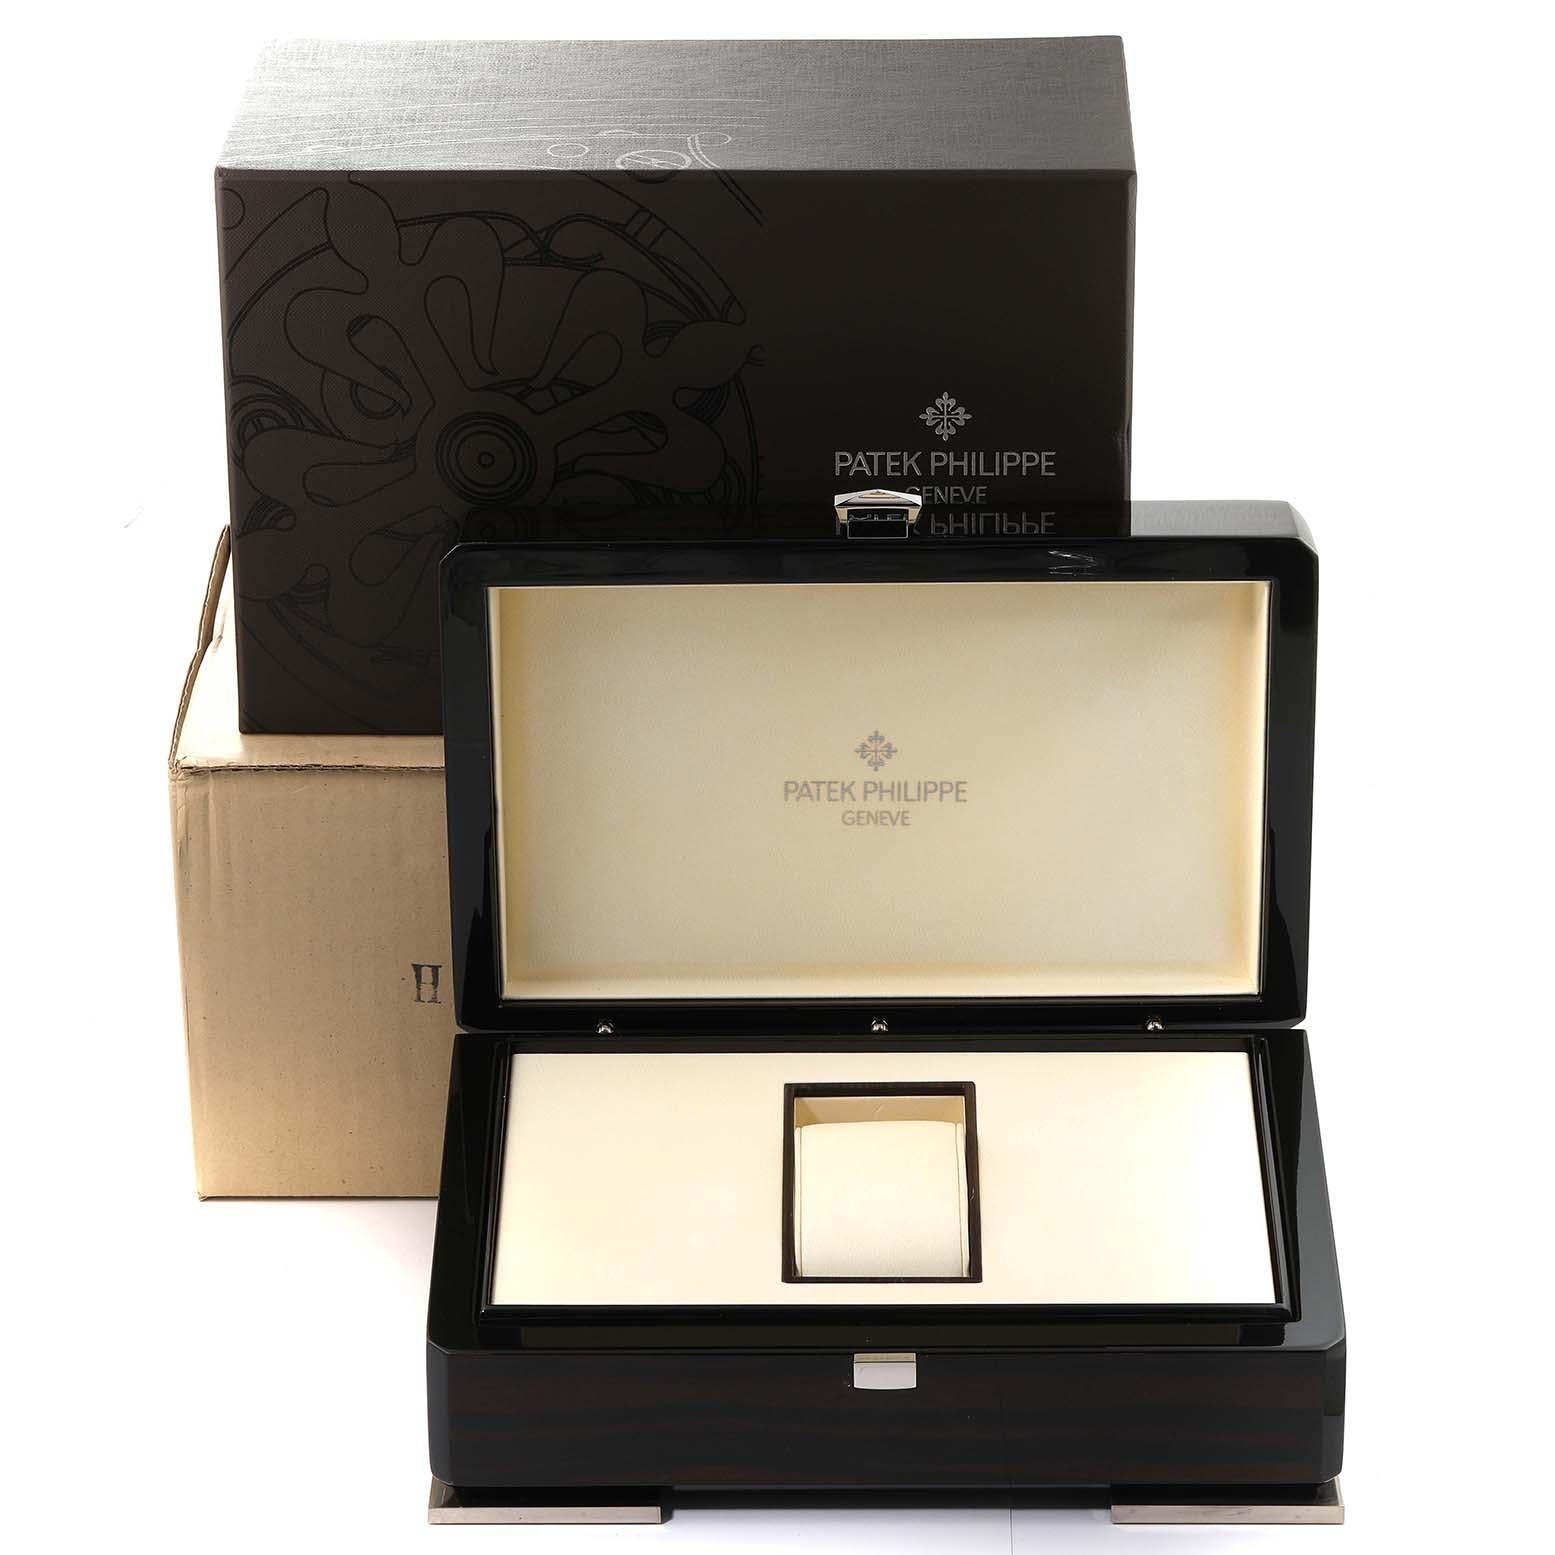 Patek Philippe Grand Complications Perpetual Calendar Rose Gold Watch 5270 For Sale 4